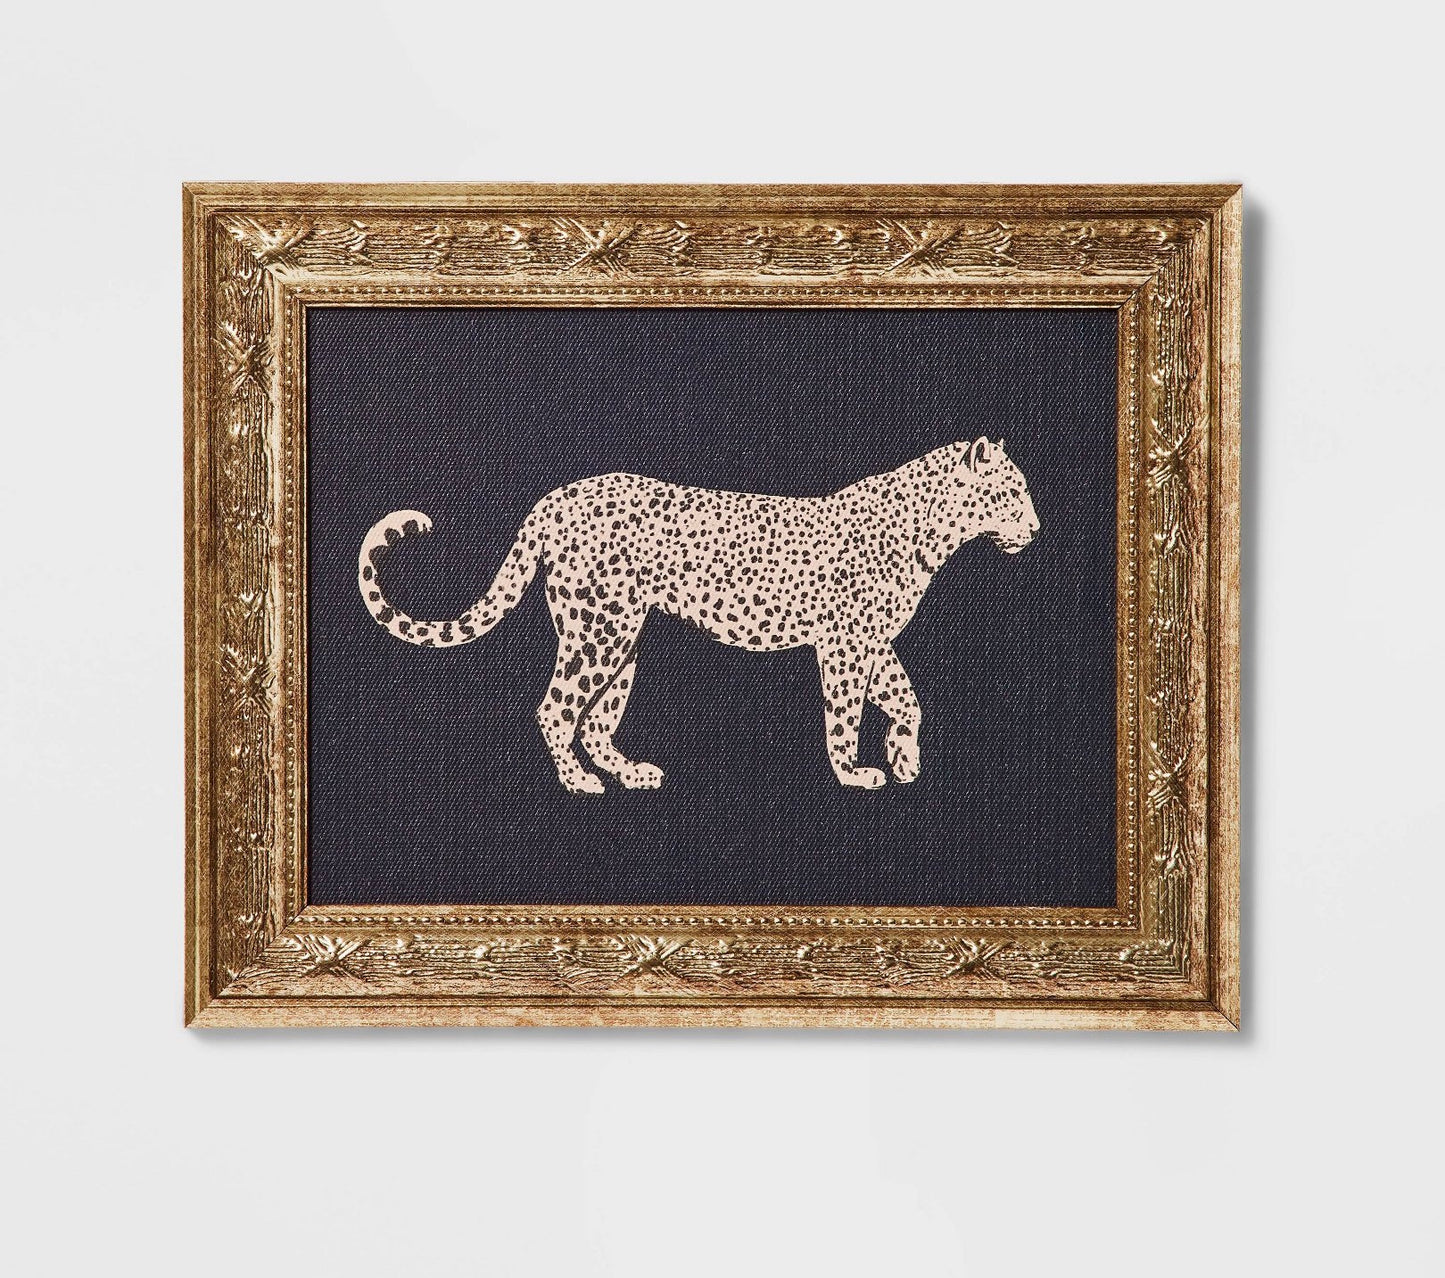 10”x8” cheetah framed wall art canvas